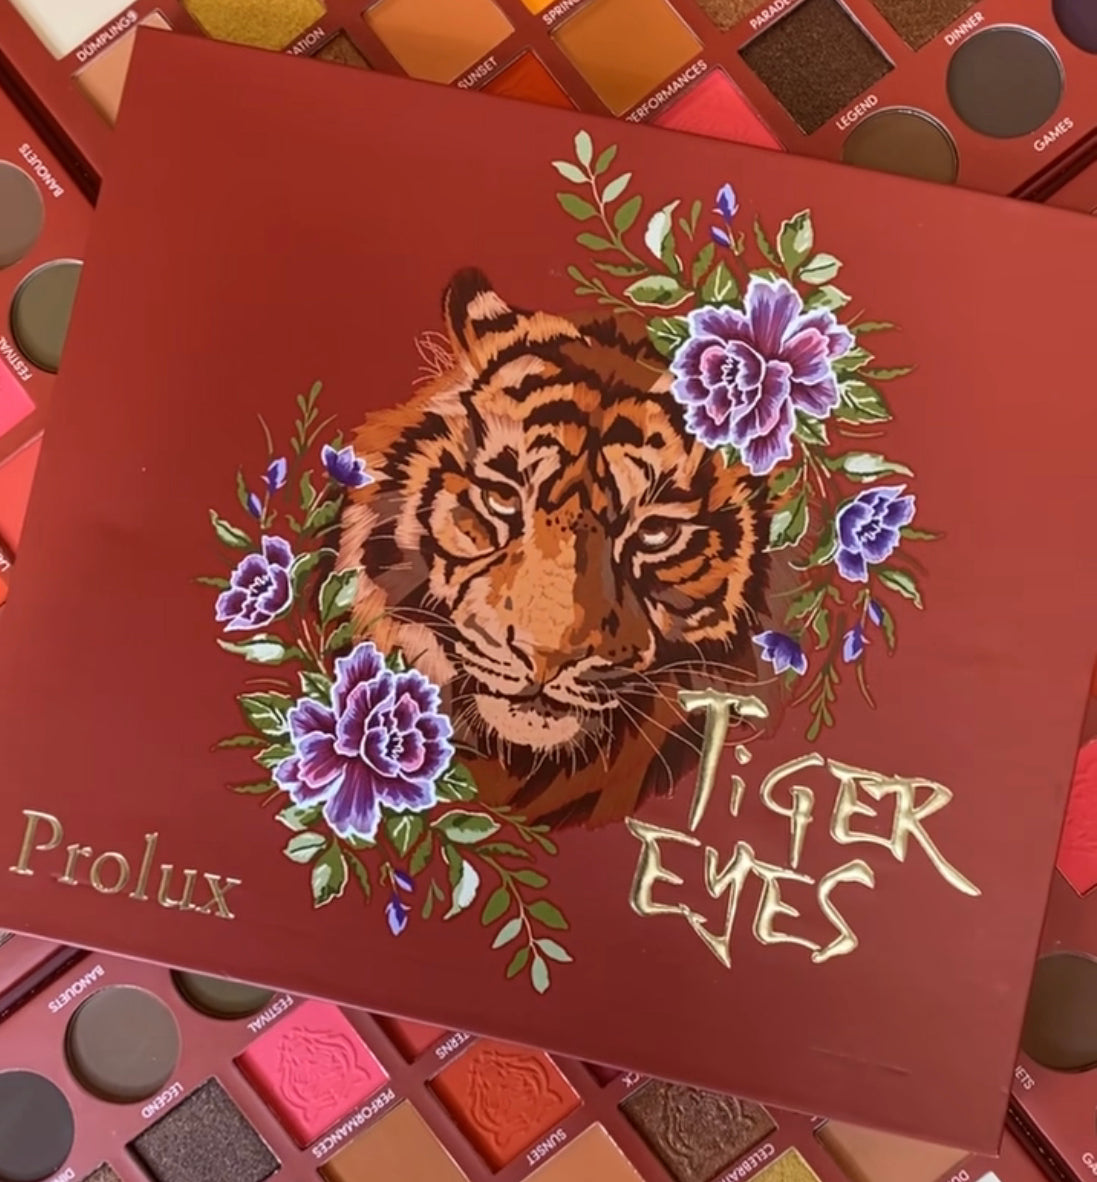 Prolux Tiger Eyes Eyeshadow Palette